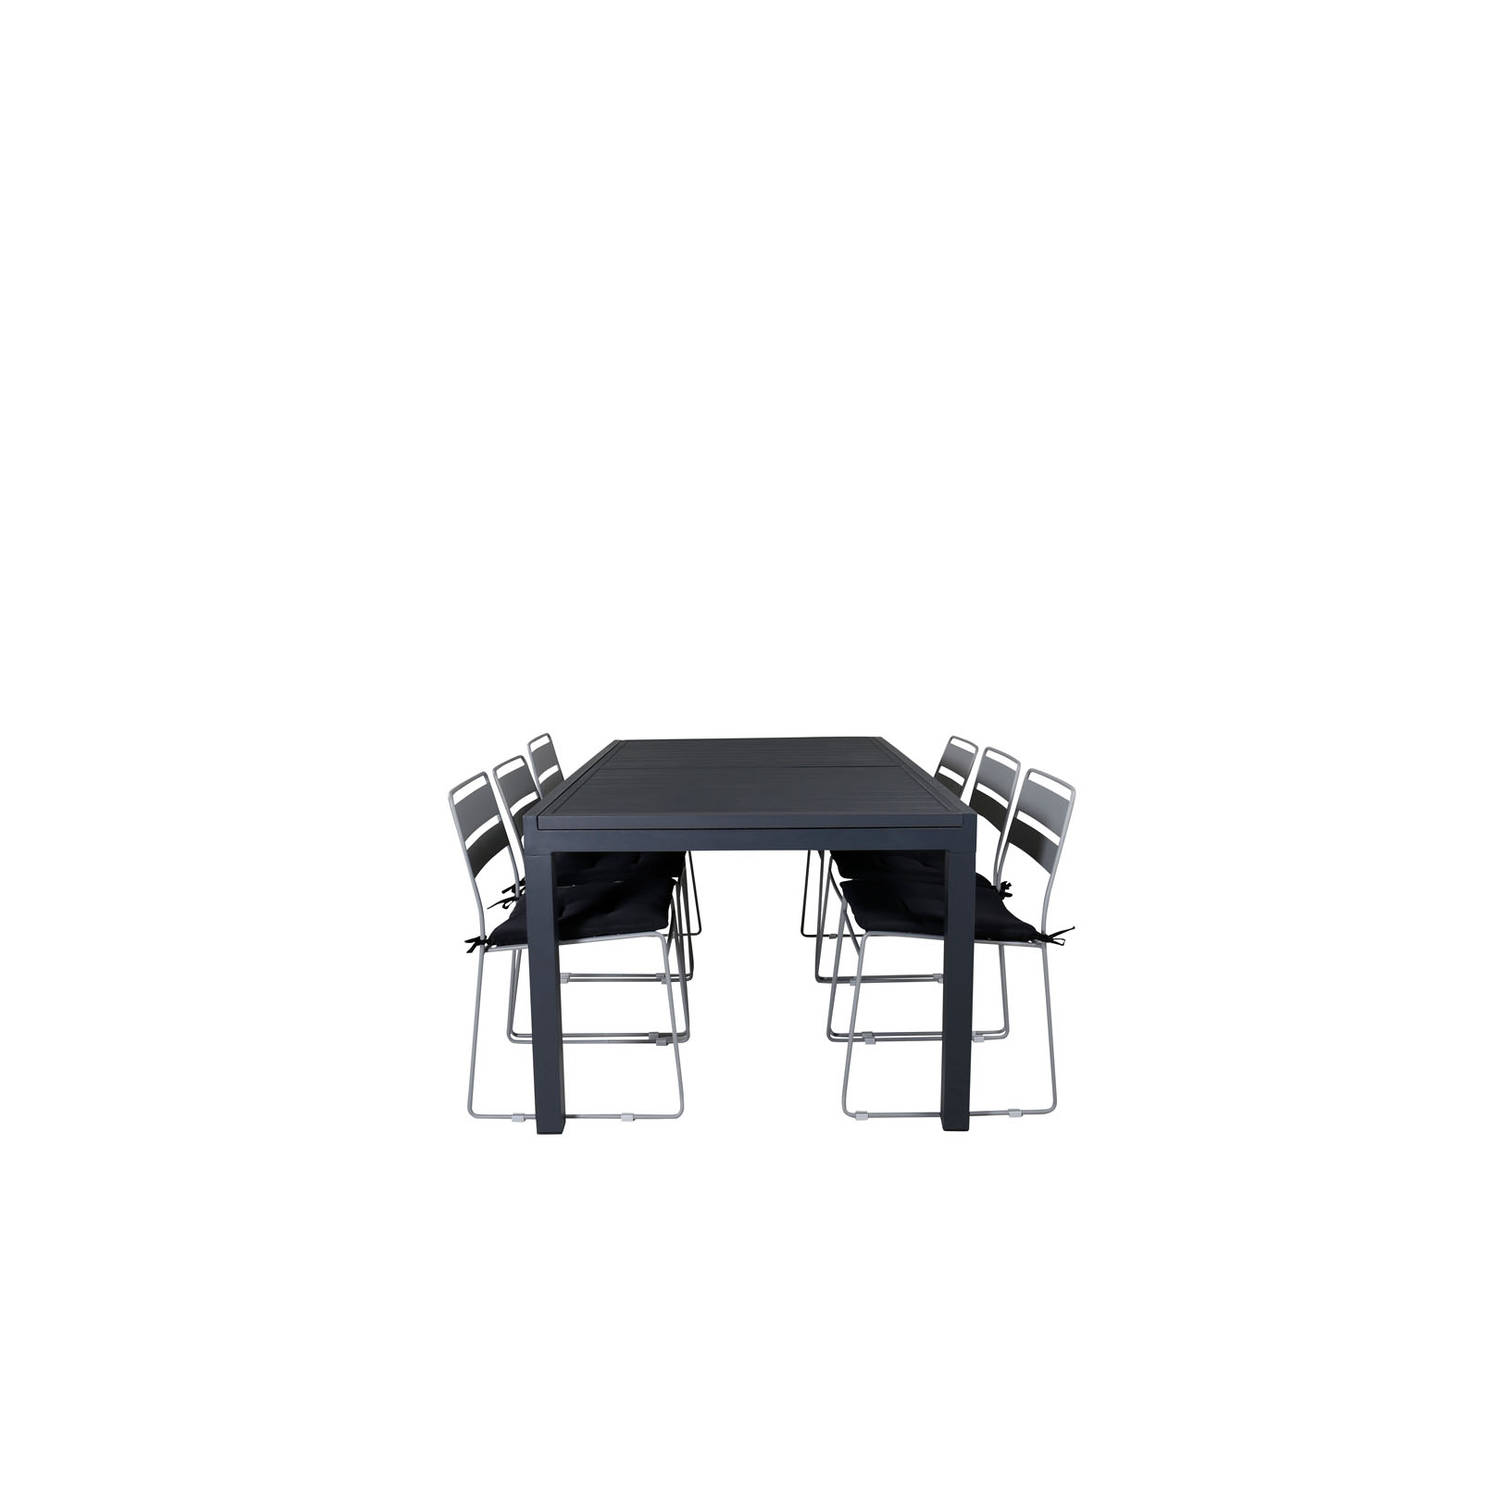 Marbella tuinmeubelset tafel 100x160/240cm en 6 stoel Lina grijs, zwart.